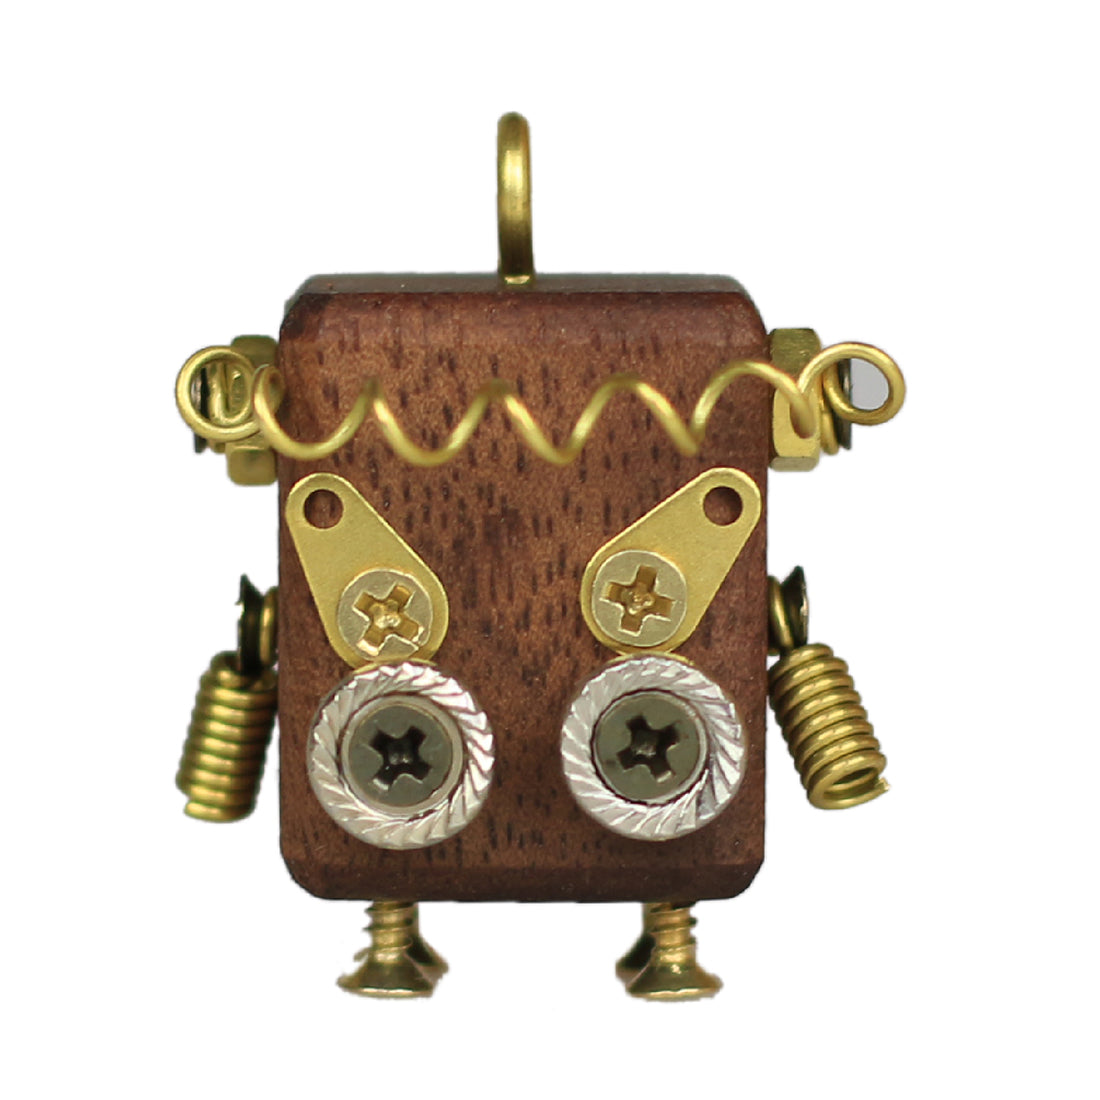 Upgrade 20Pcs DIY Steampunk Wooden Robot Figure Materials Package Kit Crafts